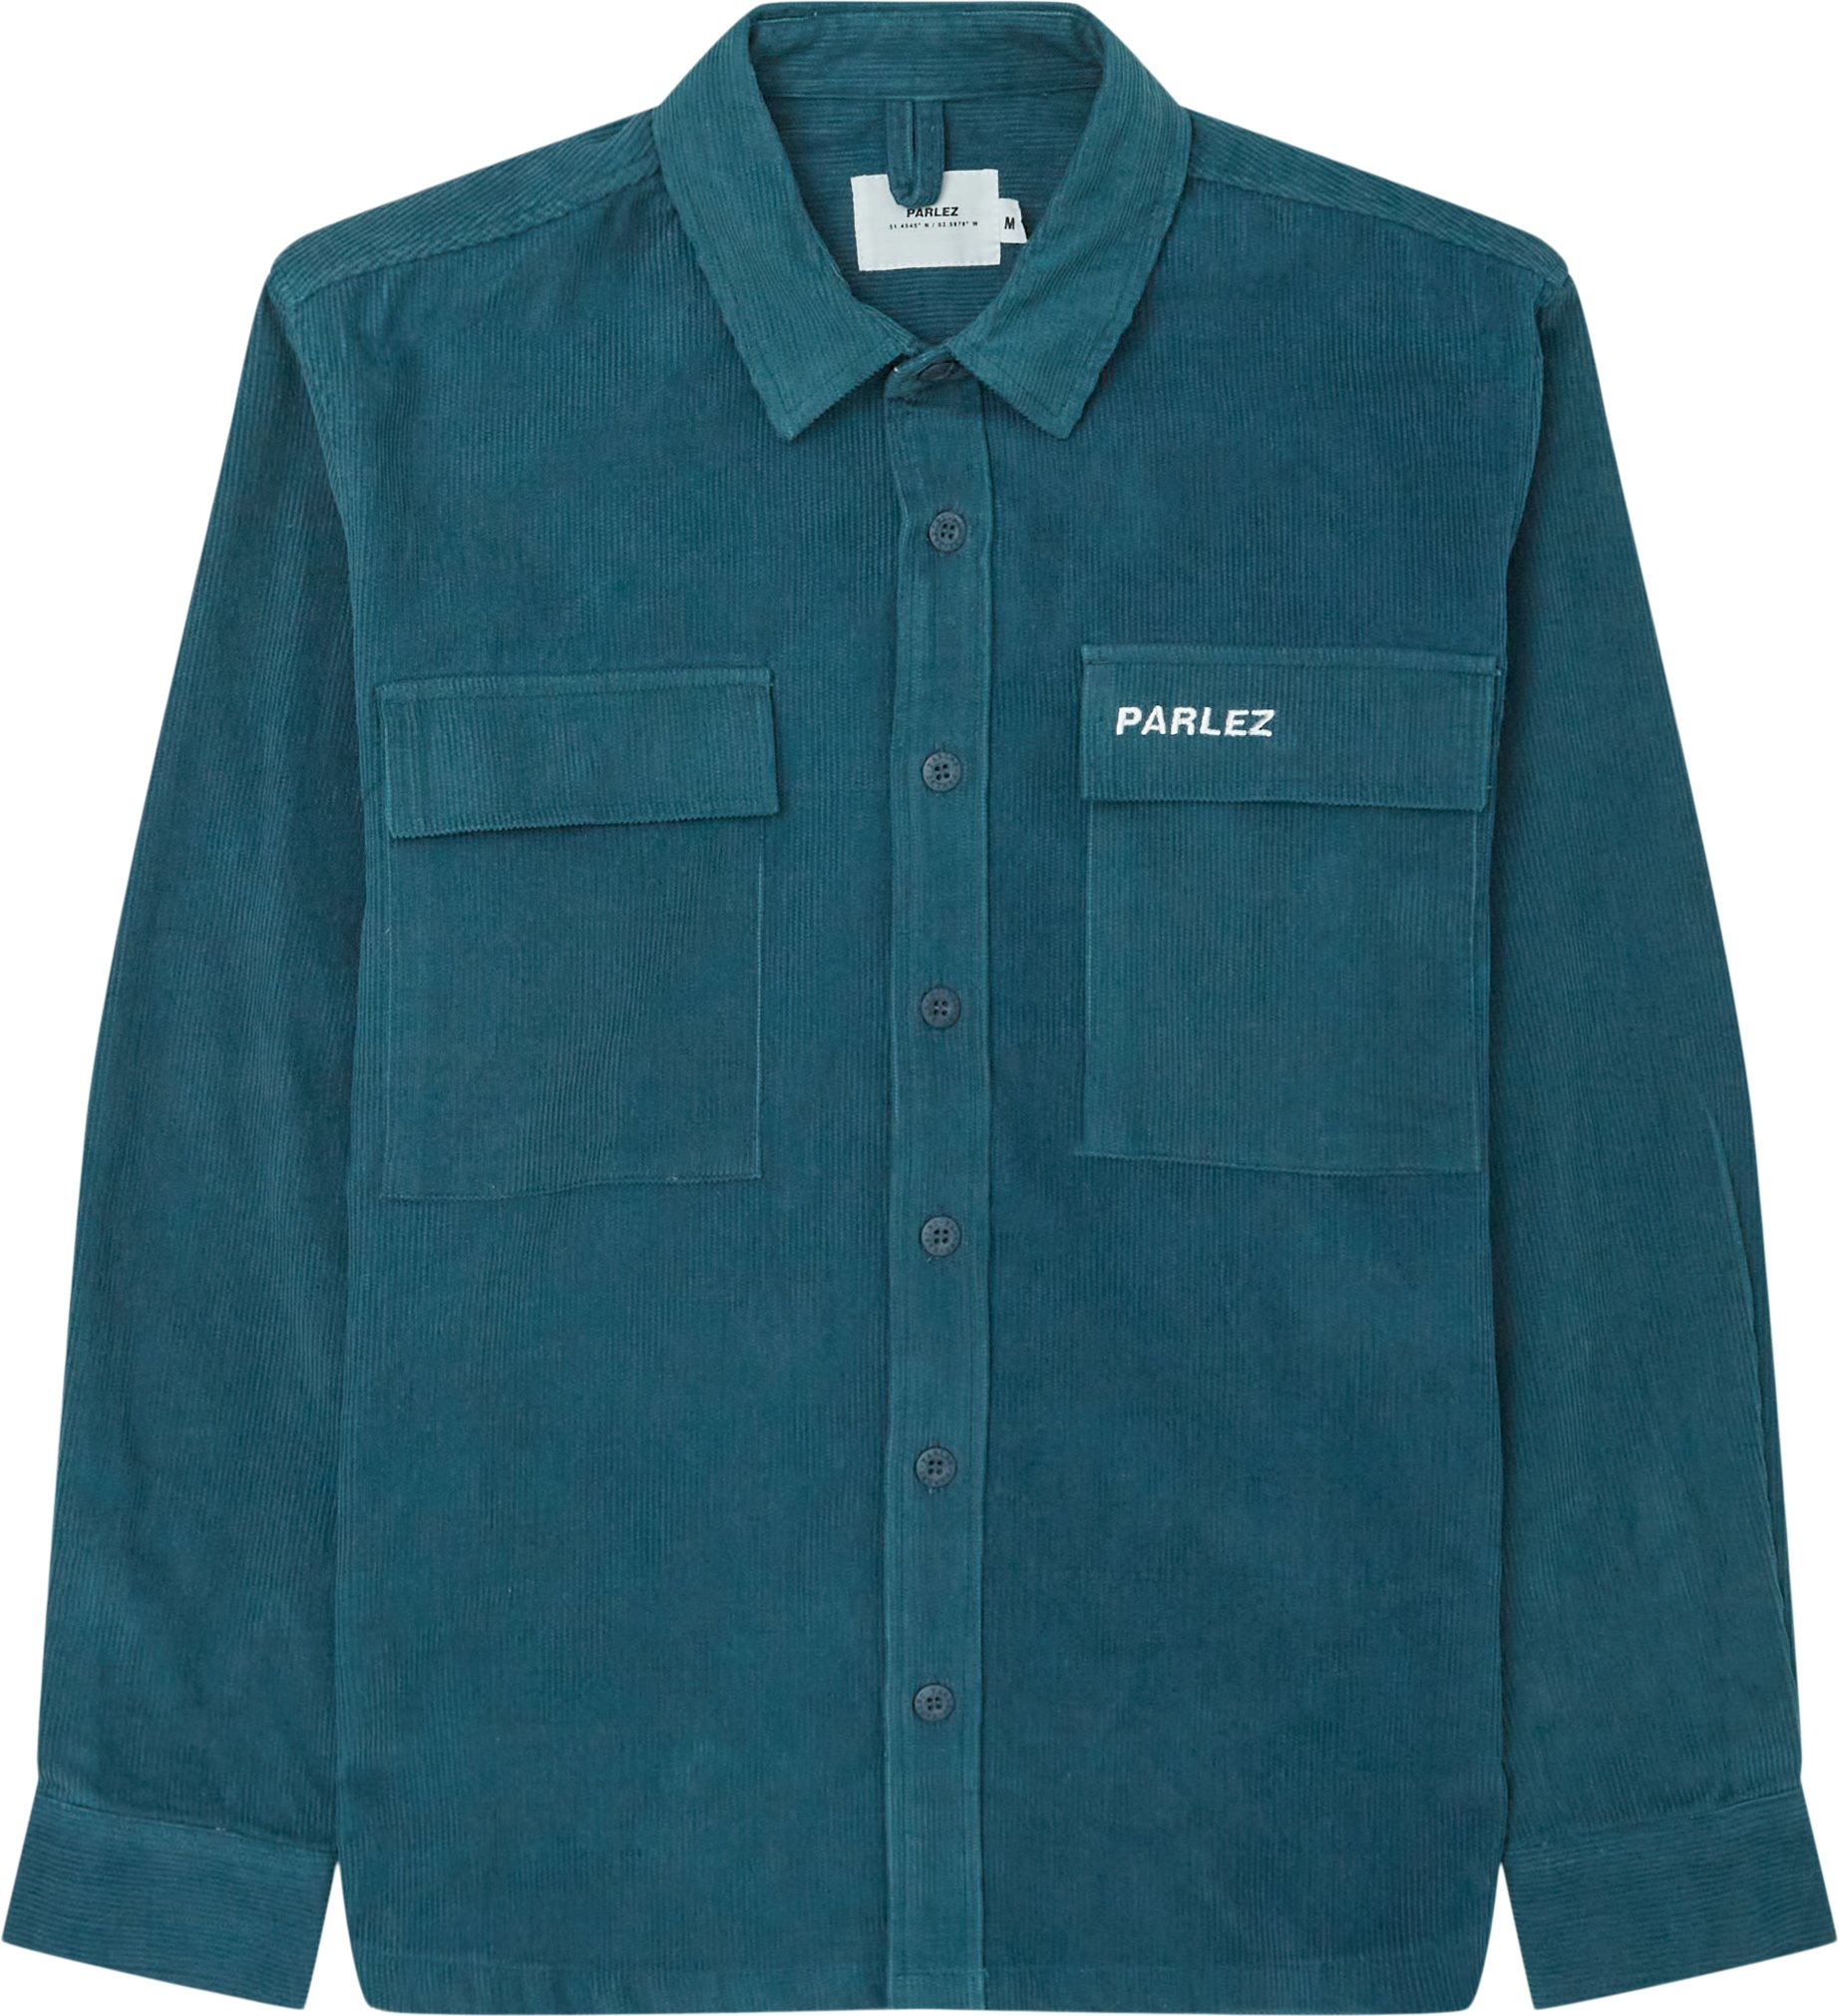 Mayreau Cord Skjorte - Shirts - Regular fit - Green